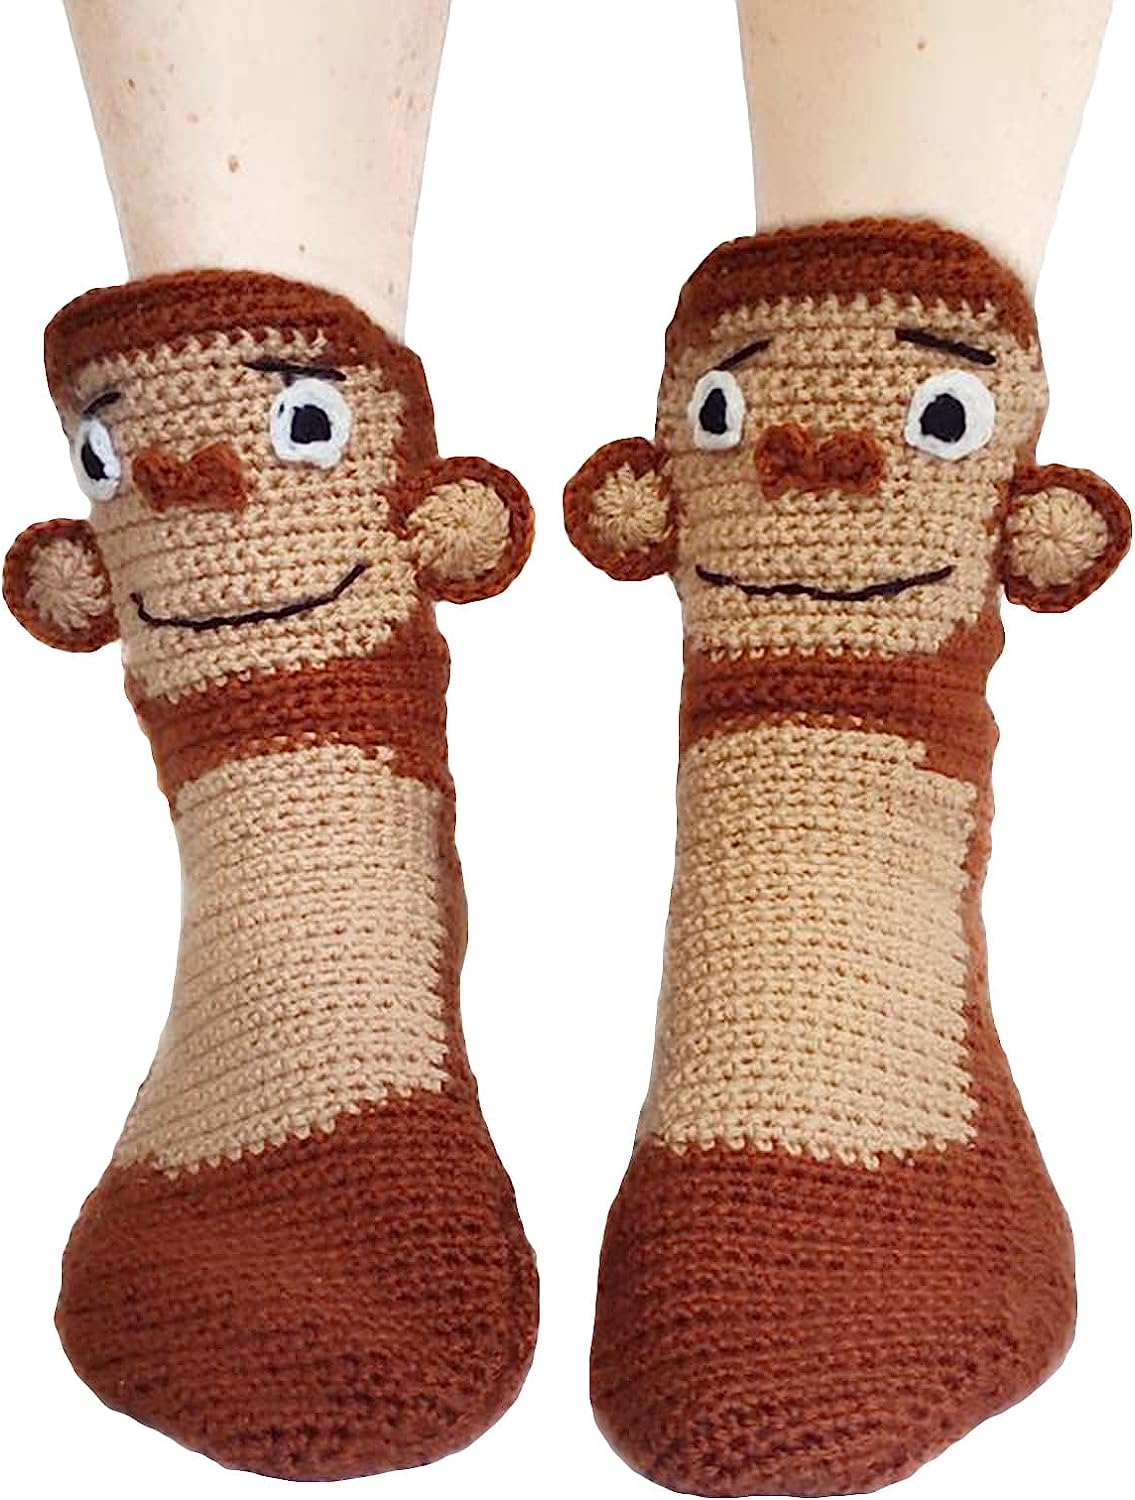 THATLILSHOP One Size / Monkey Women Men Novelty Animal Pattern Socks Crazy Funny Knit Crocodile Socks Funny Gifts